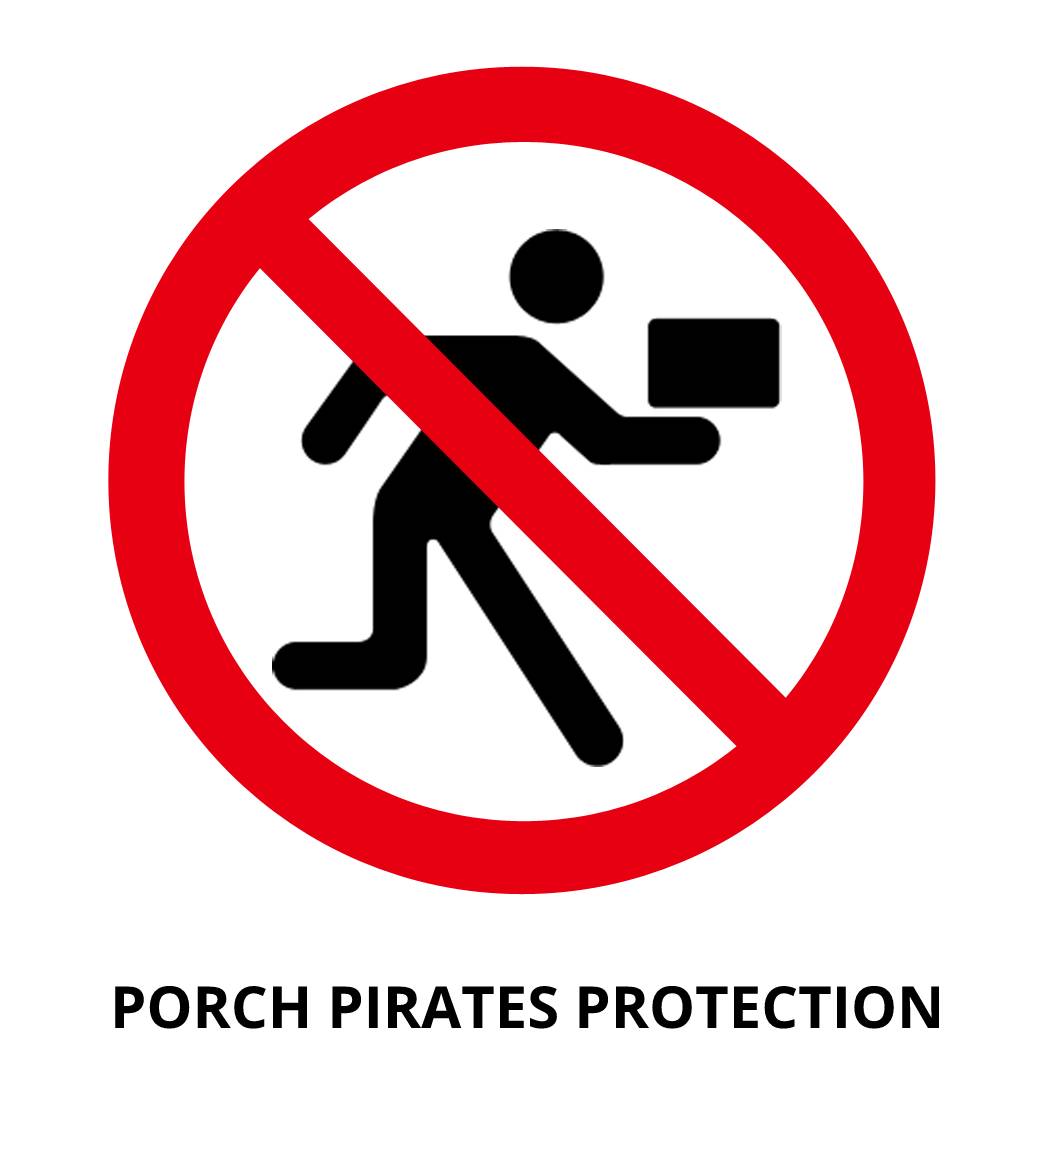 Porch Pirates Protection (kcc)